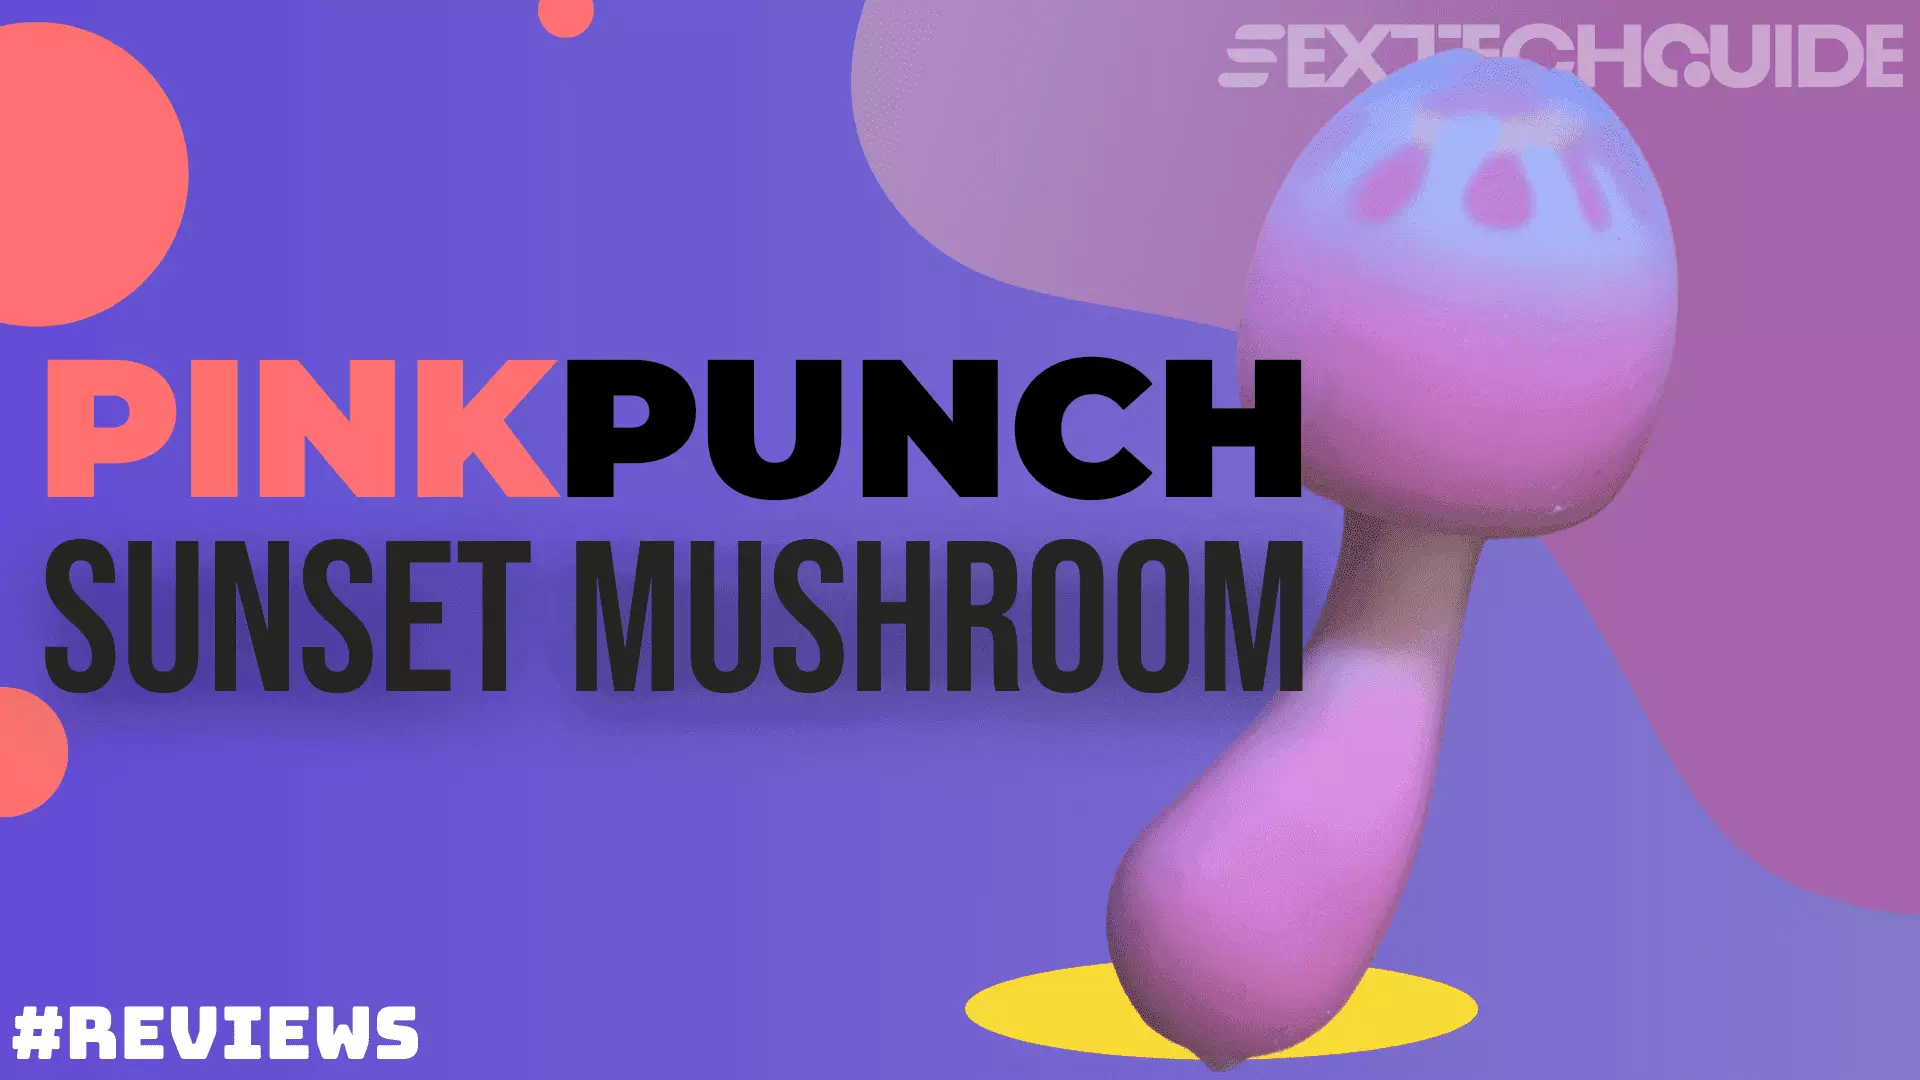 Pink Punch Sunset Mushroom vibrator review.